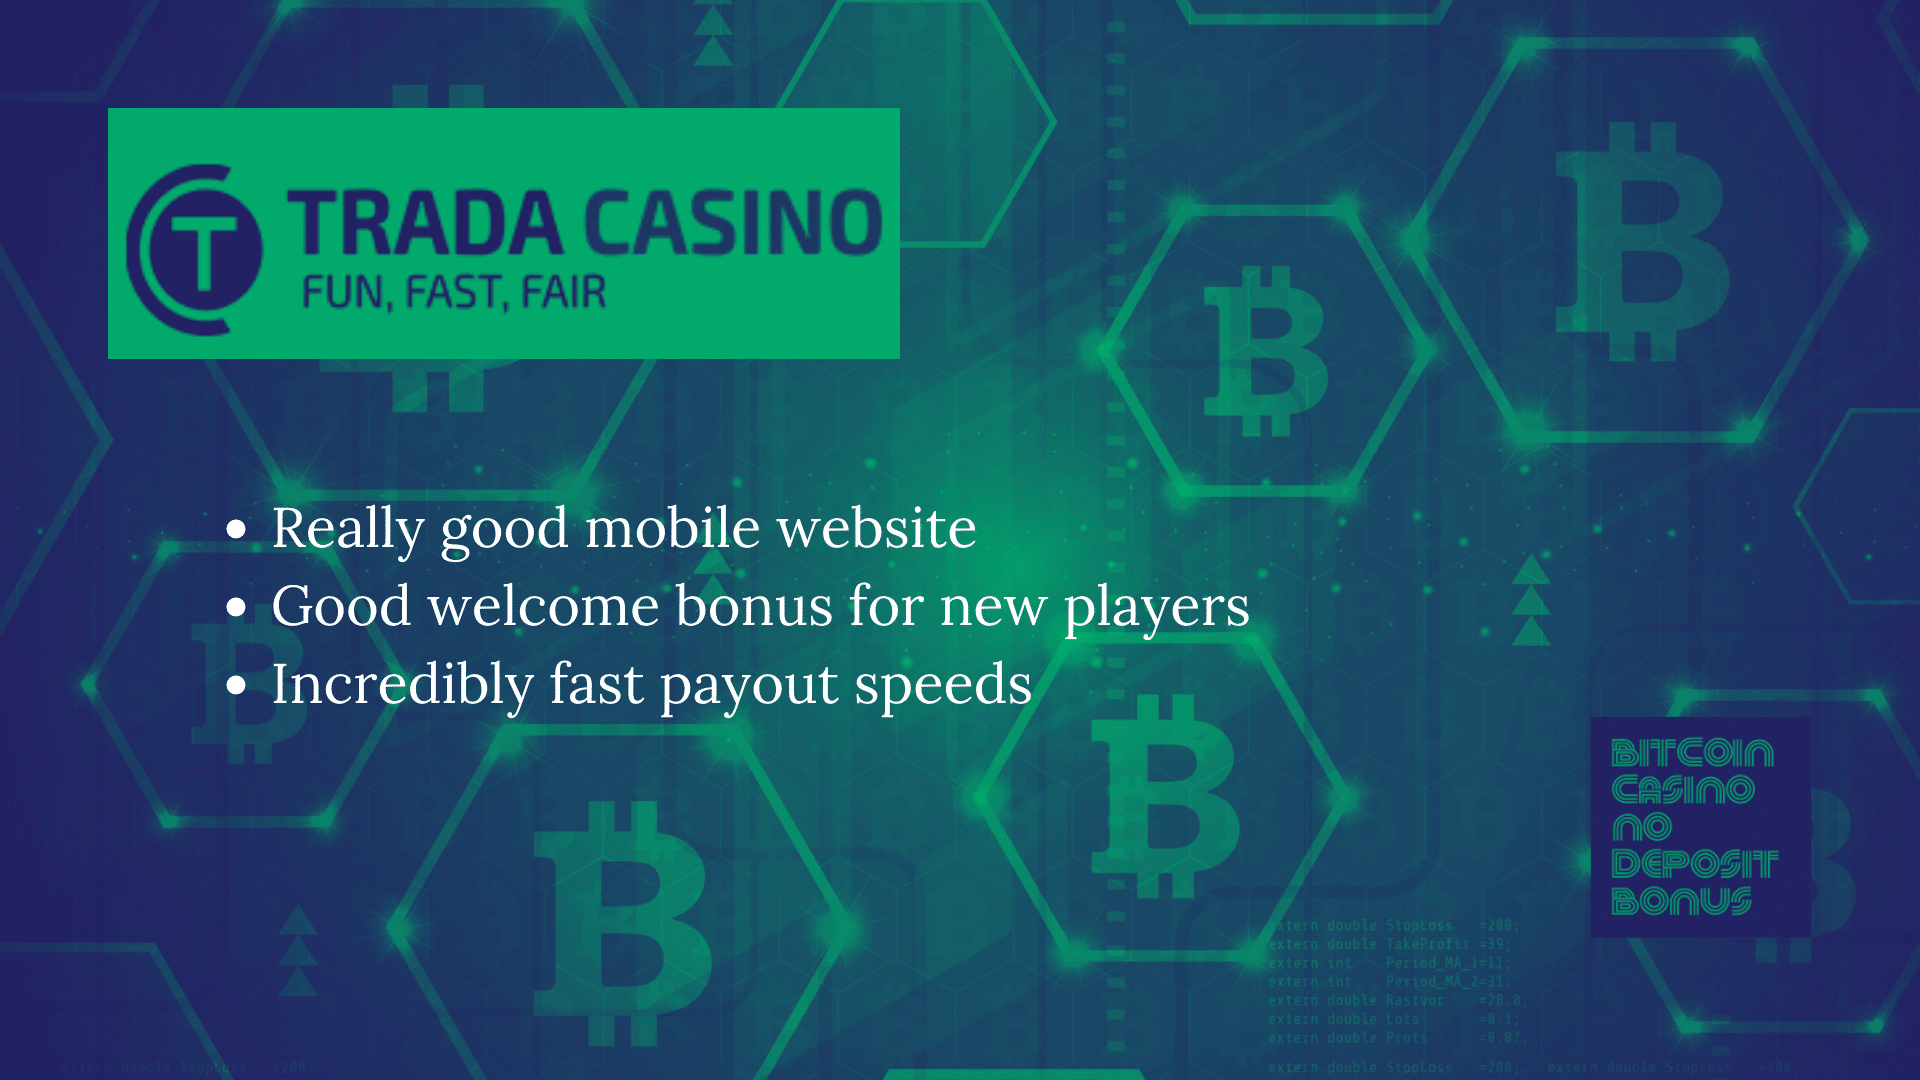 You are currently viewing Trada Casino Bonus Codes – TradaCasino.com Free Spins June 2022